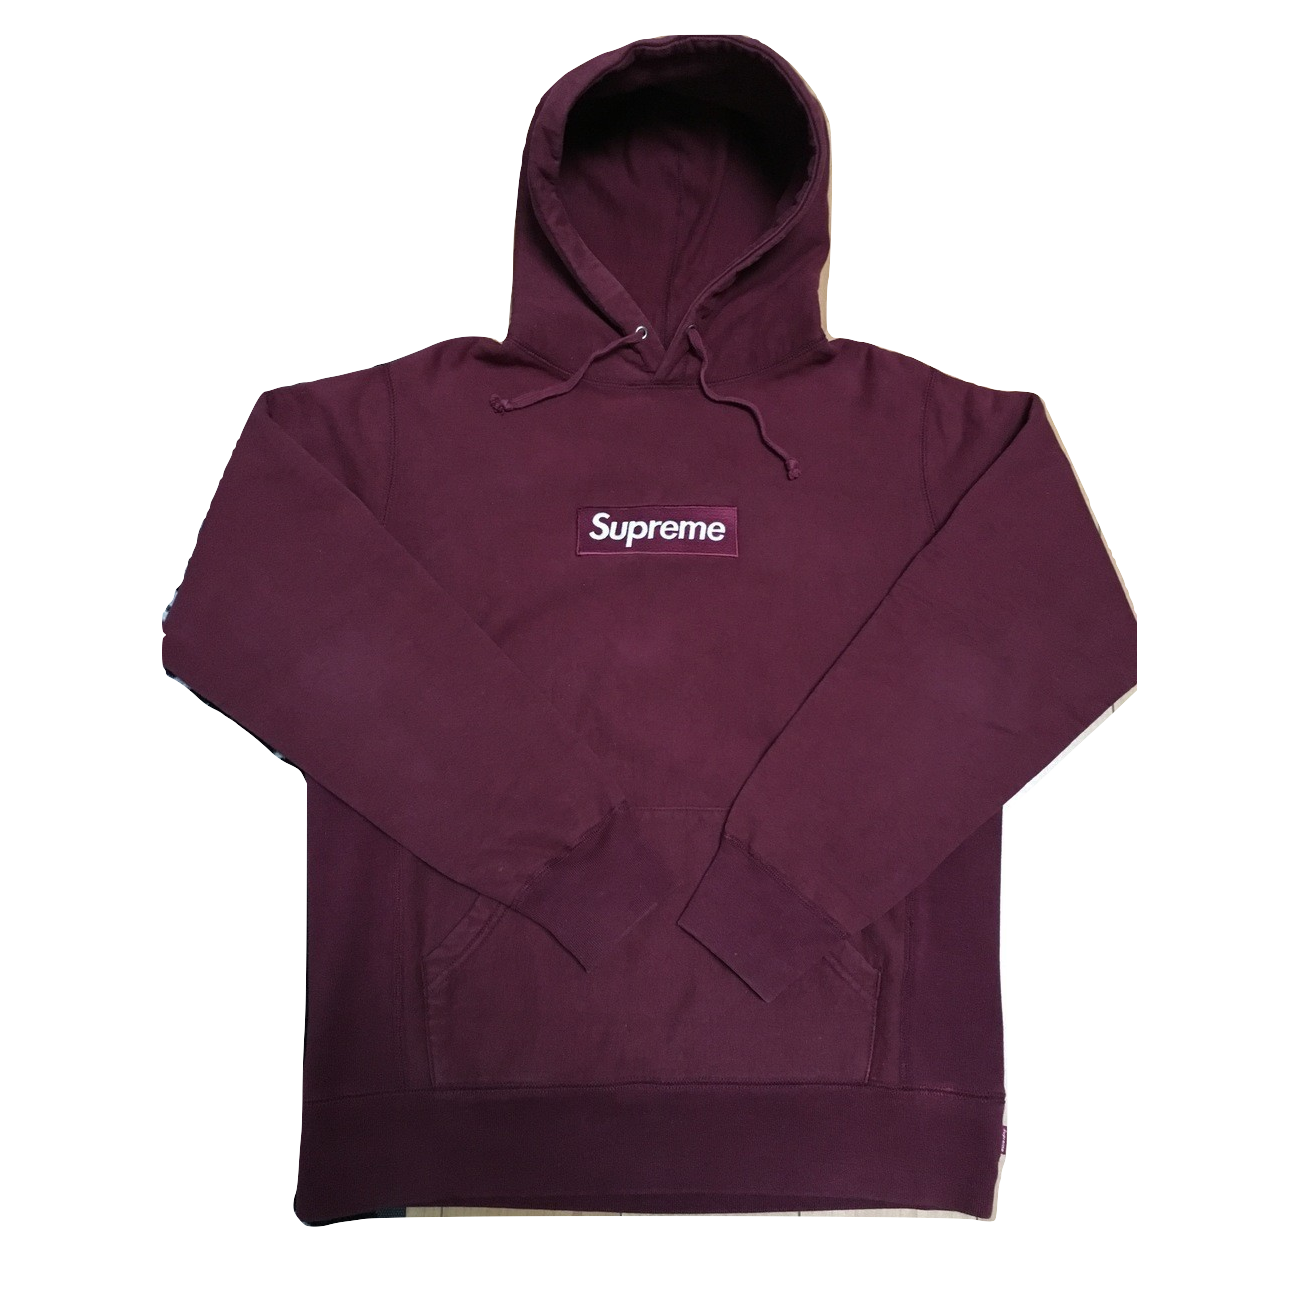 Supreme Box Logo Hooded Sweatshirt - Burgundy FW11 - Used